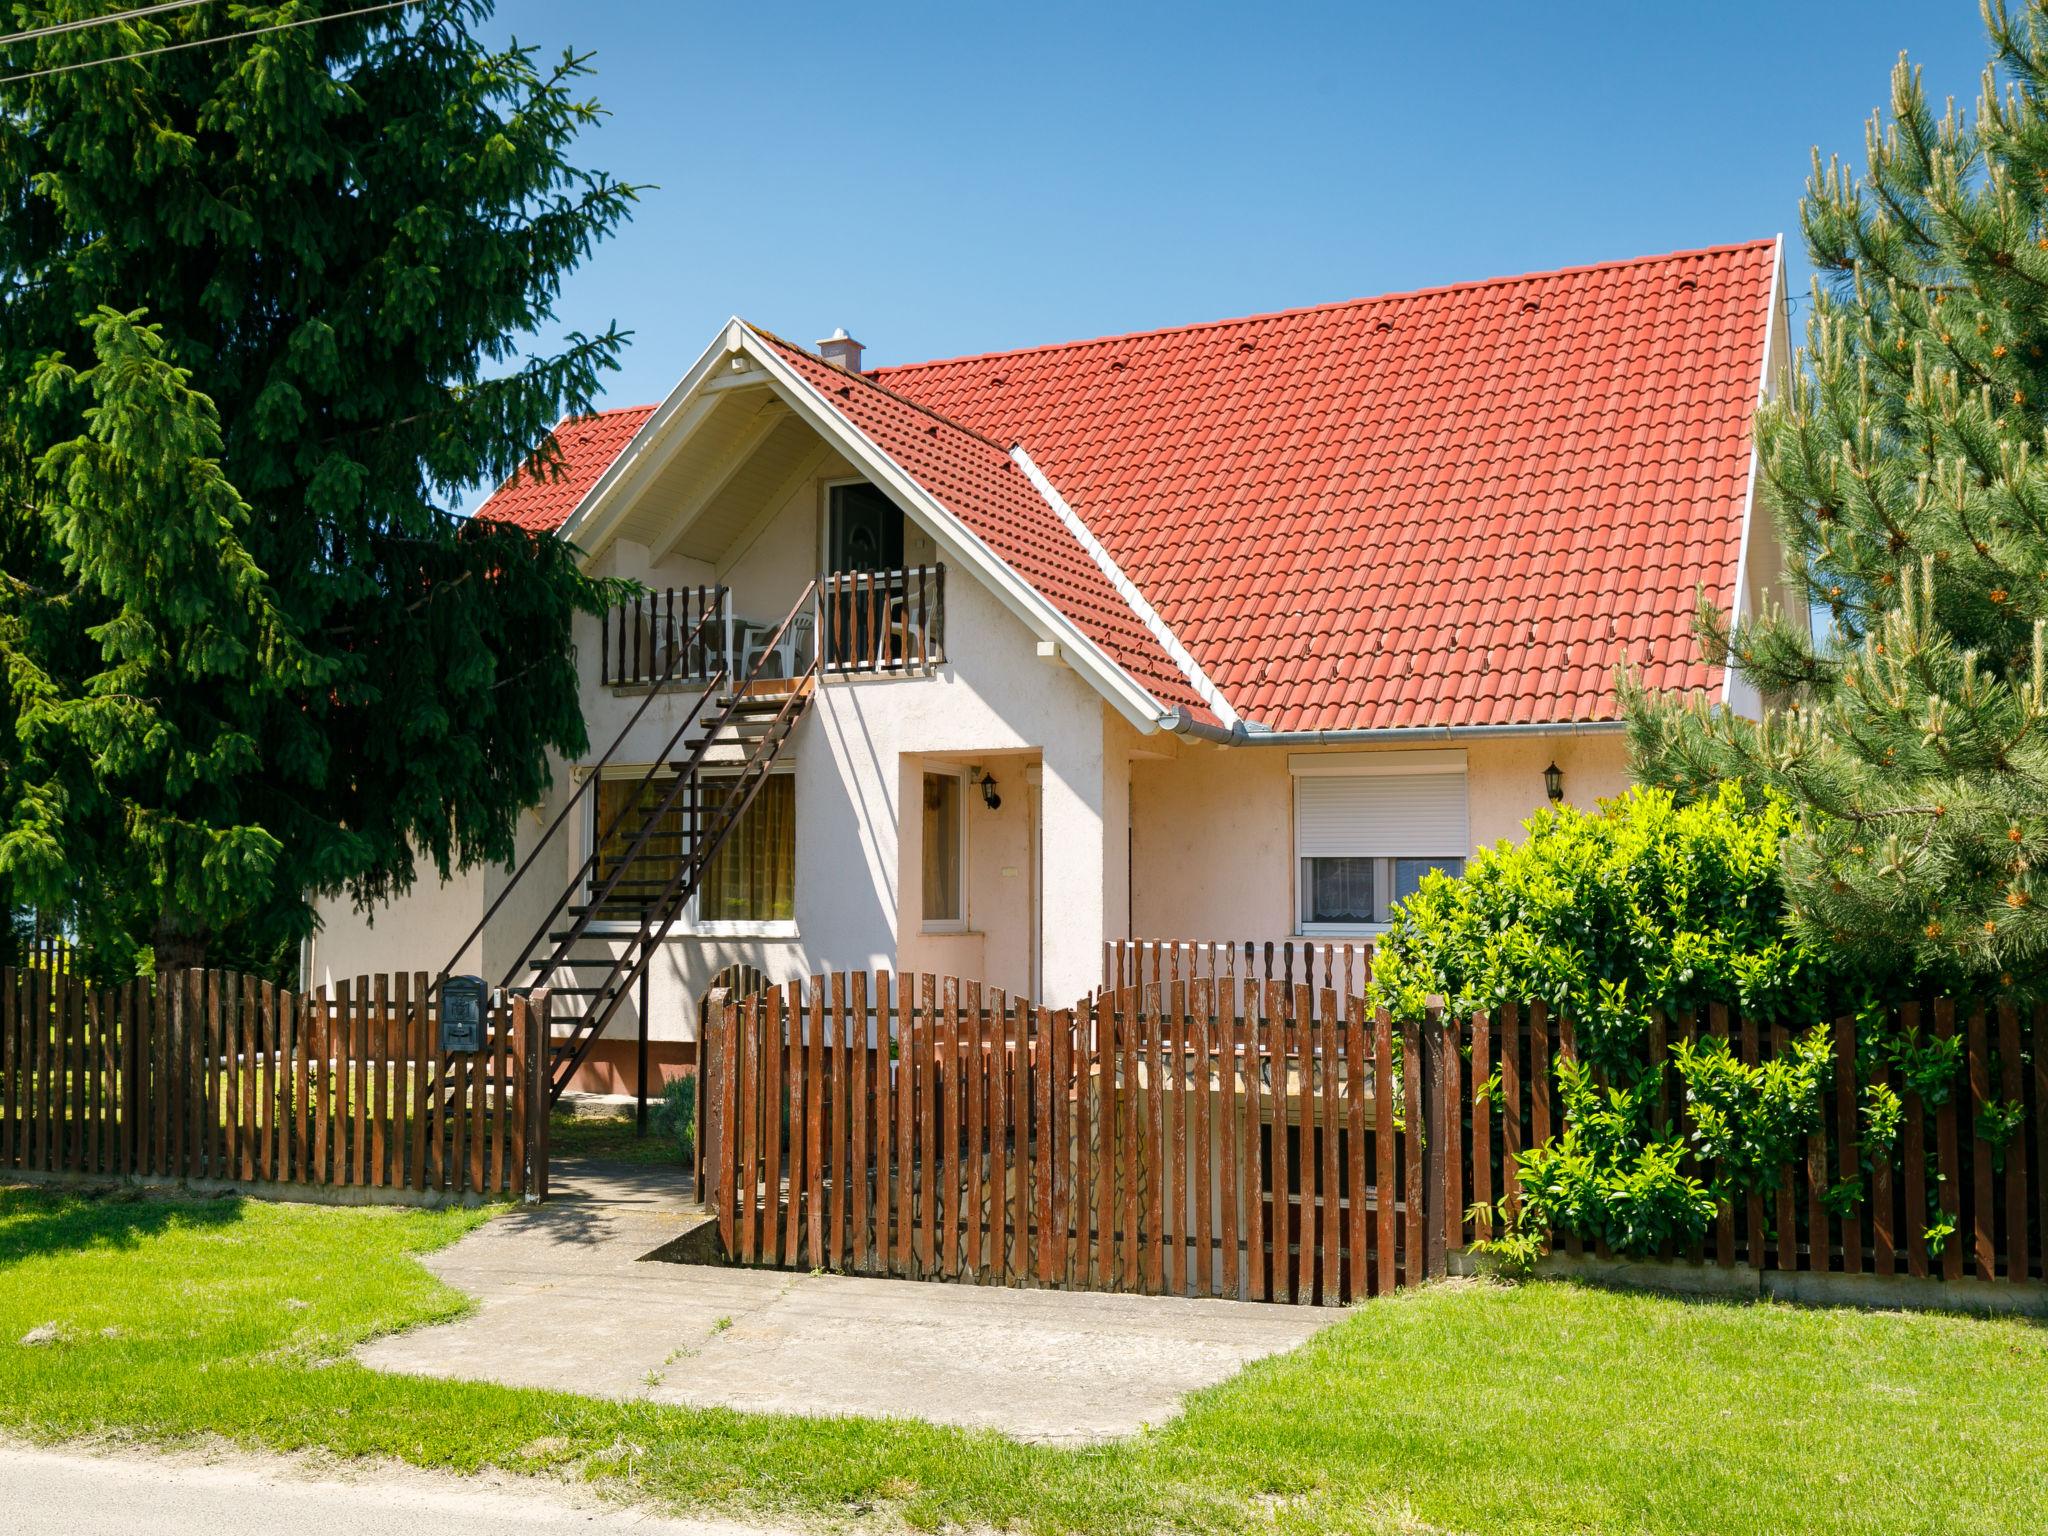 Foto 1 - Casa con 5 camere da letto a Balatonőszöd con giardino e vista sulle montagne